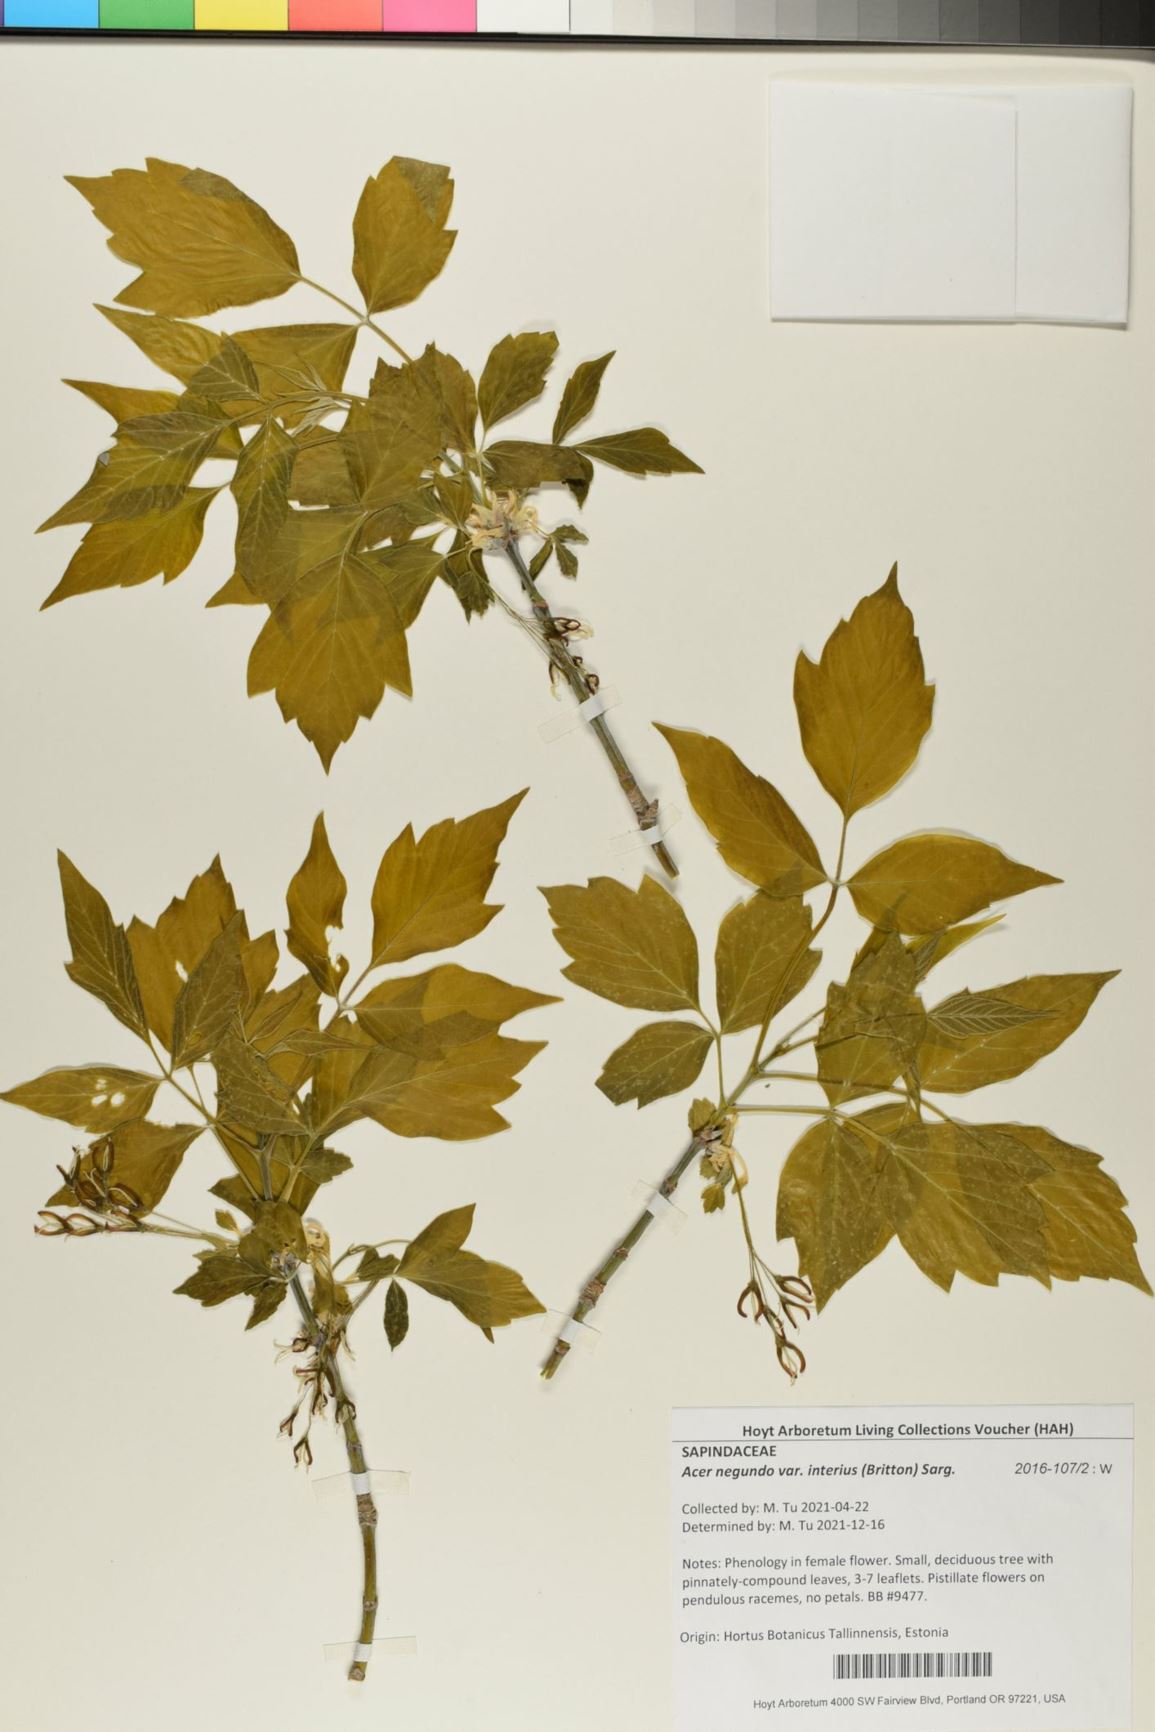 Acer negundo var. interius - boxelder, ash-leaf maple, boxelder maple